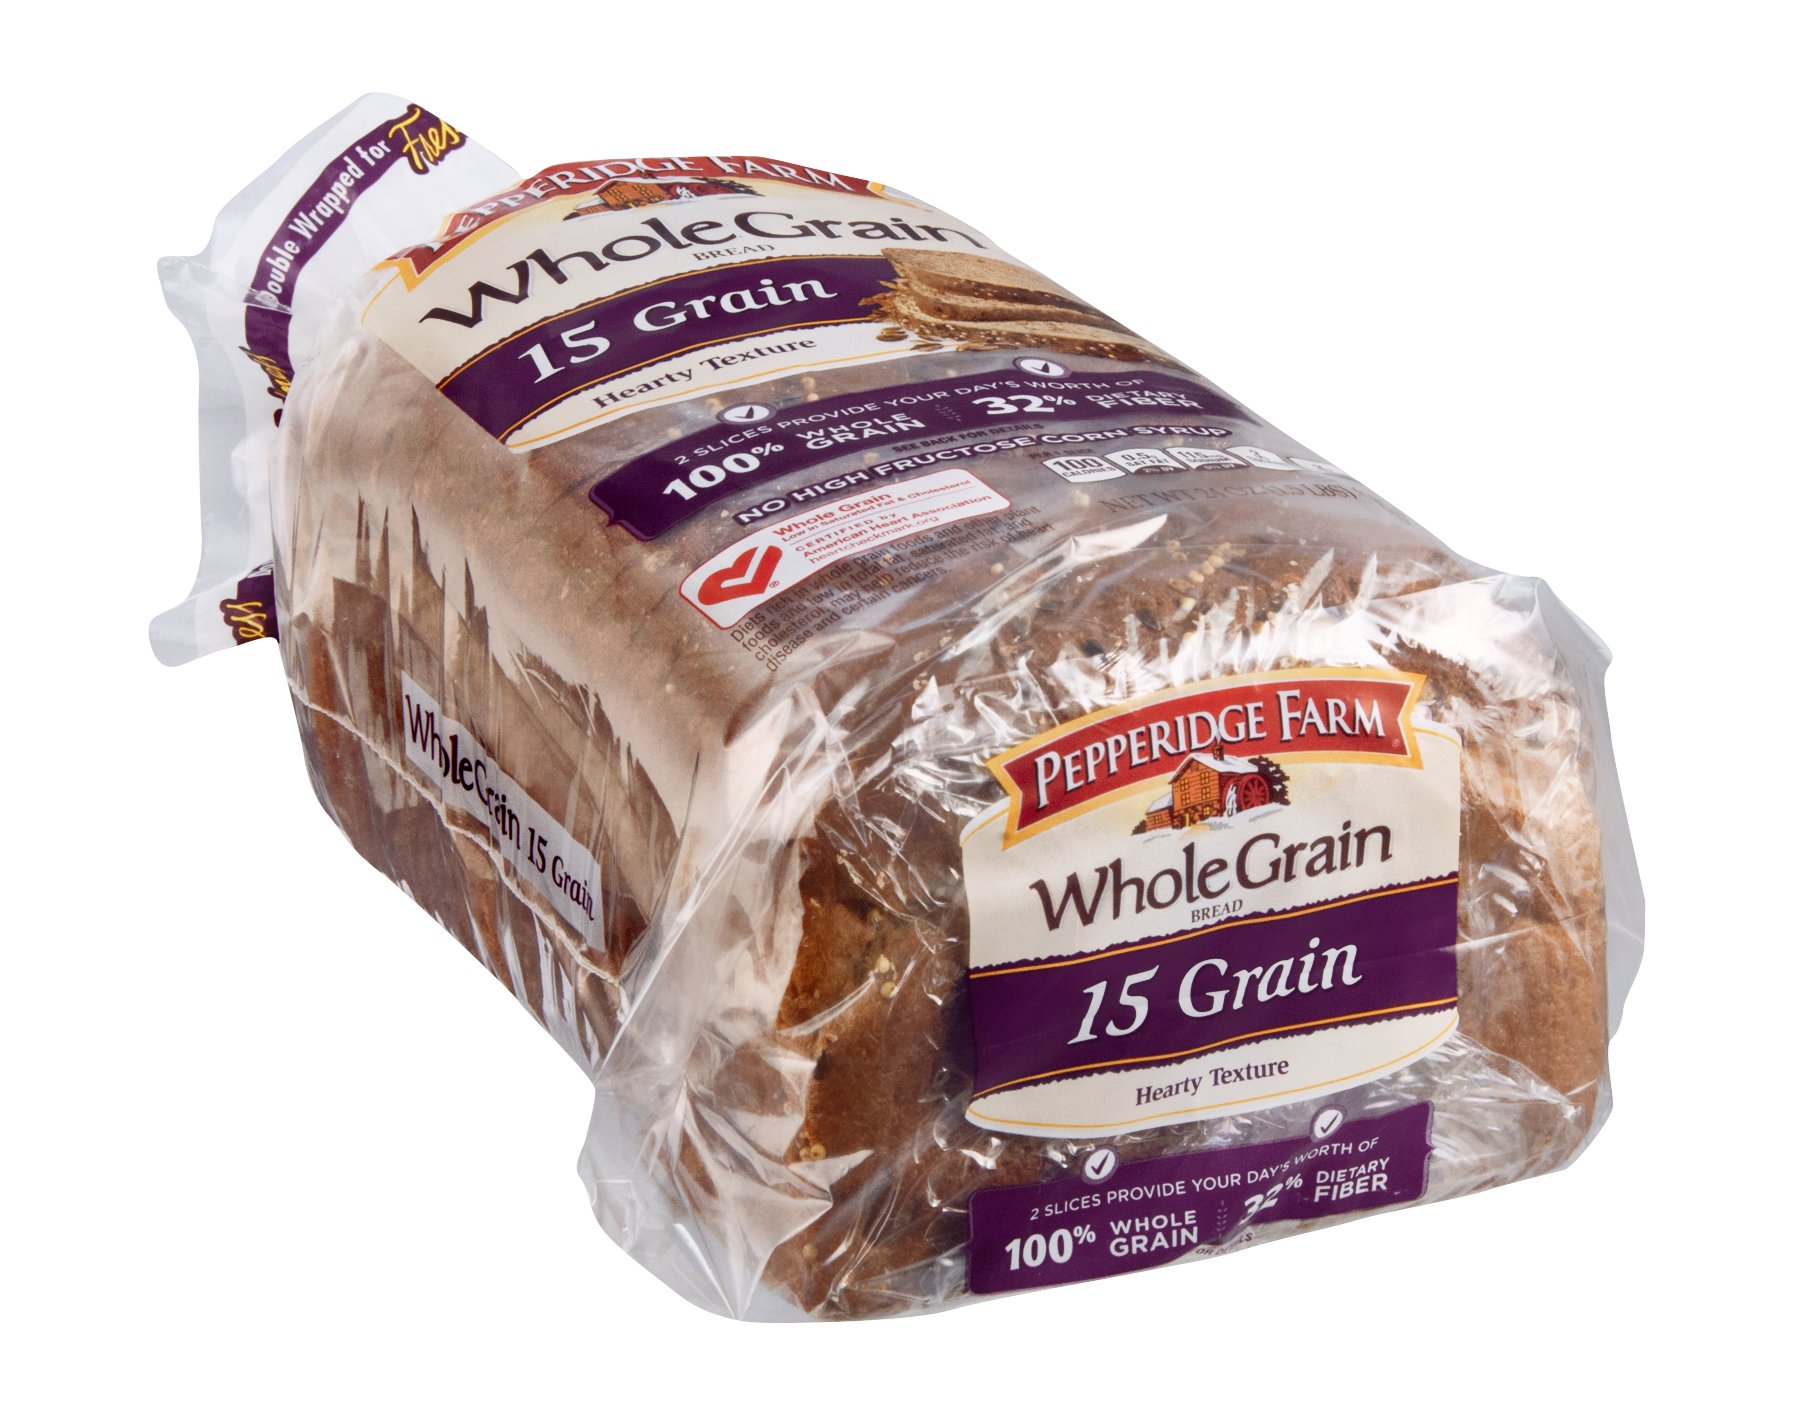 Pepperidge Farm Whole Grain 15 Grain Bread - Shop Sandwich Bread at HEB